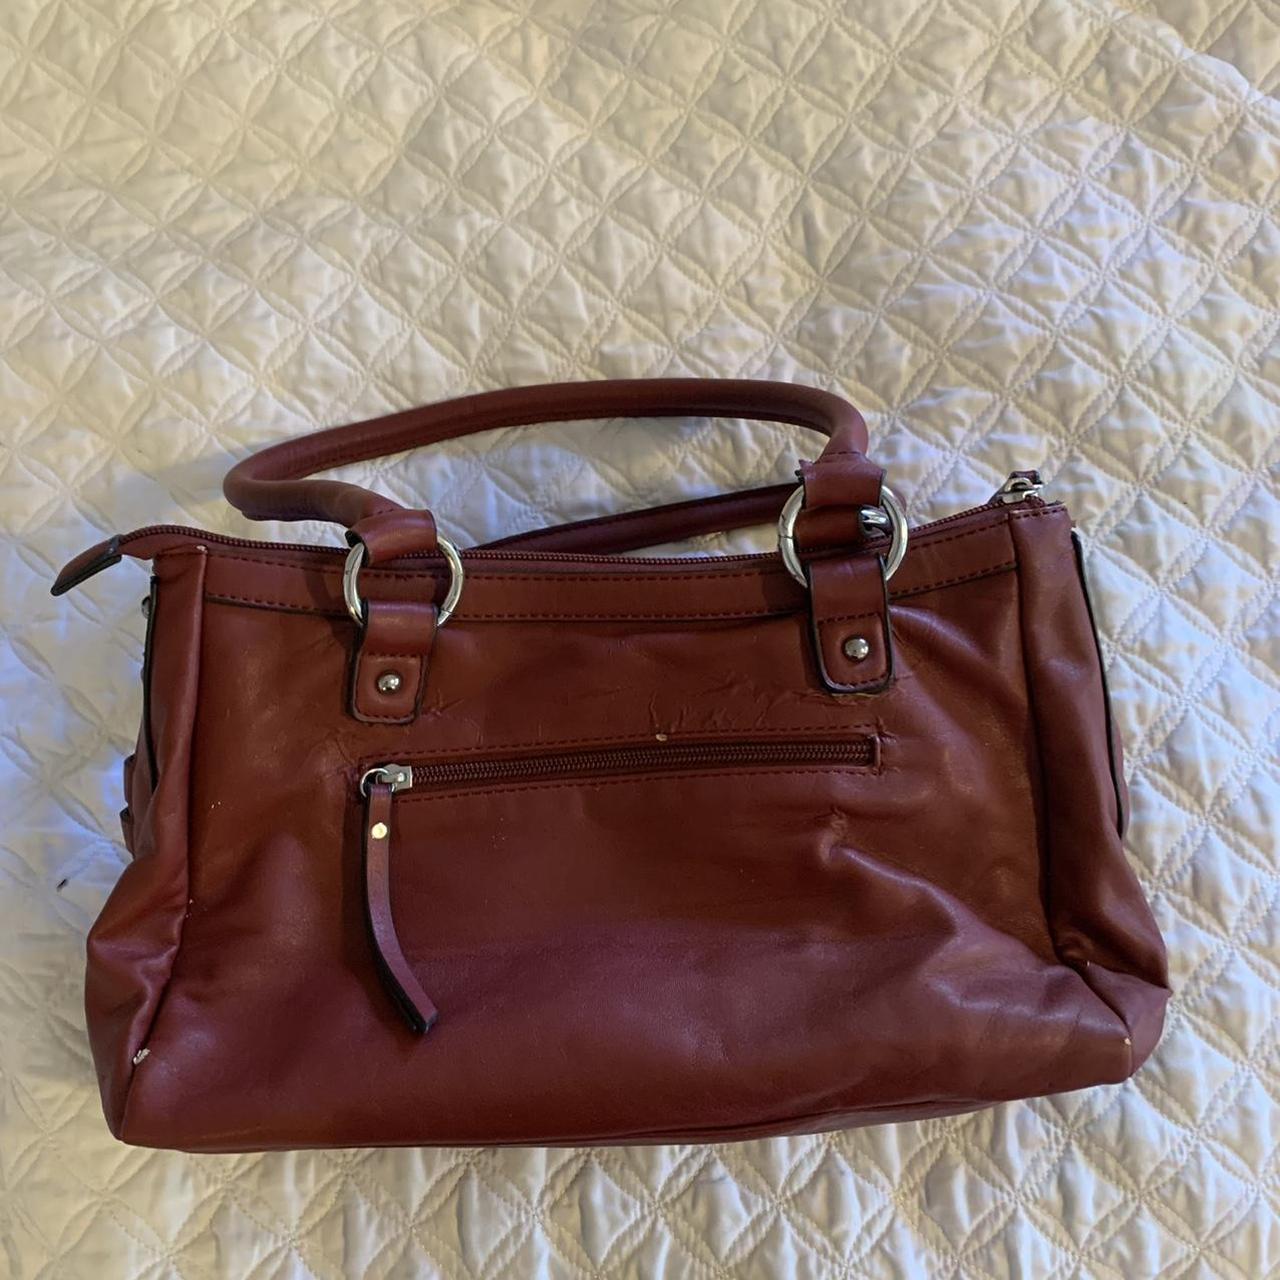 Product Image 3 - Fiorelli burgundy handbag 💋
Size: Medium
Material: